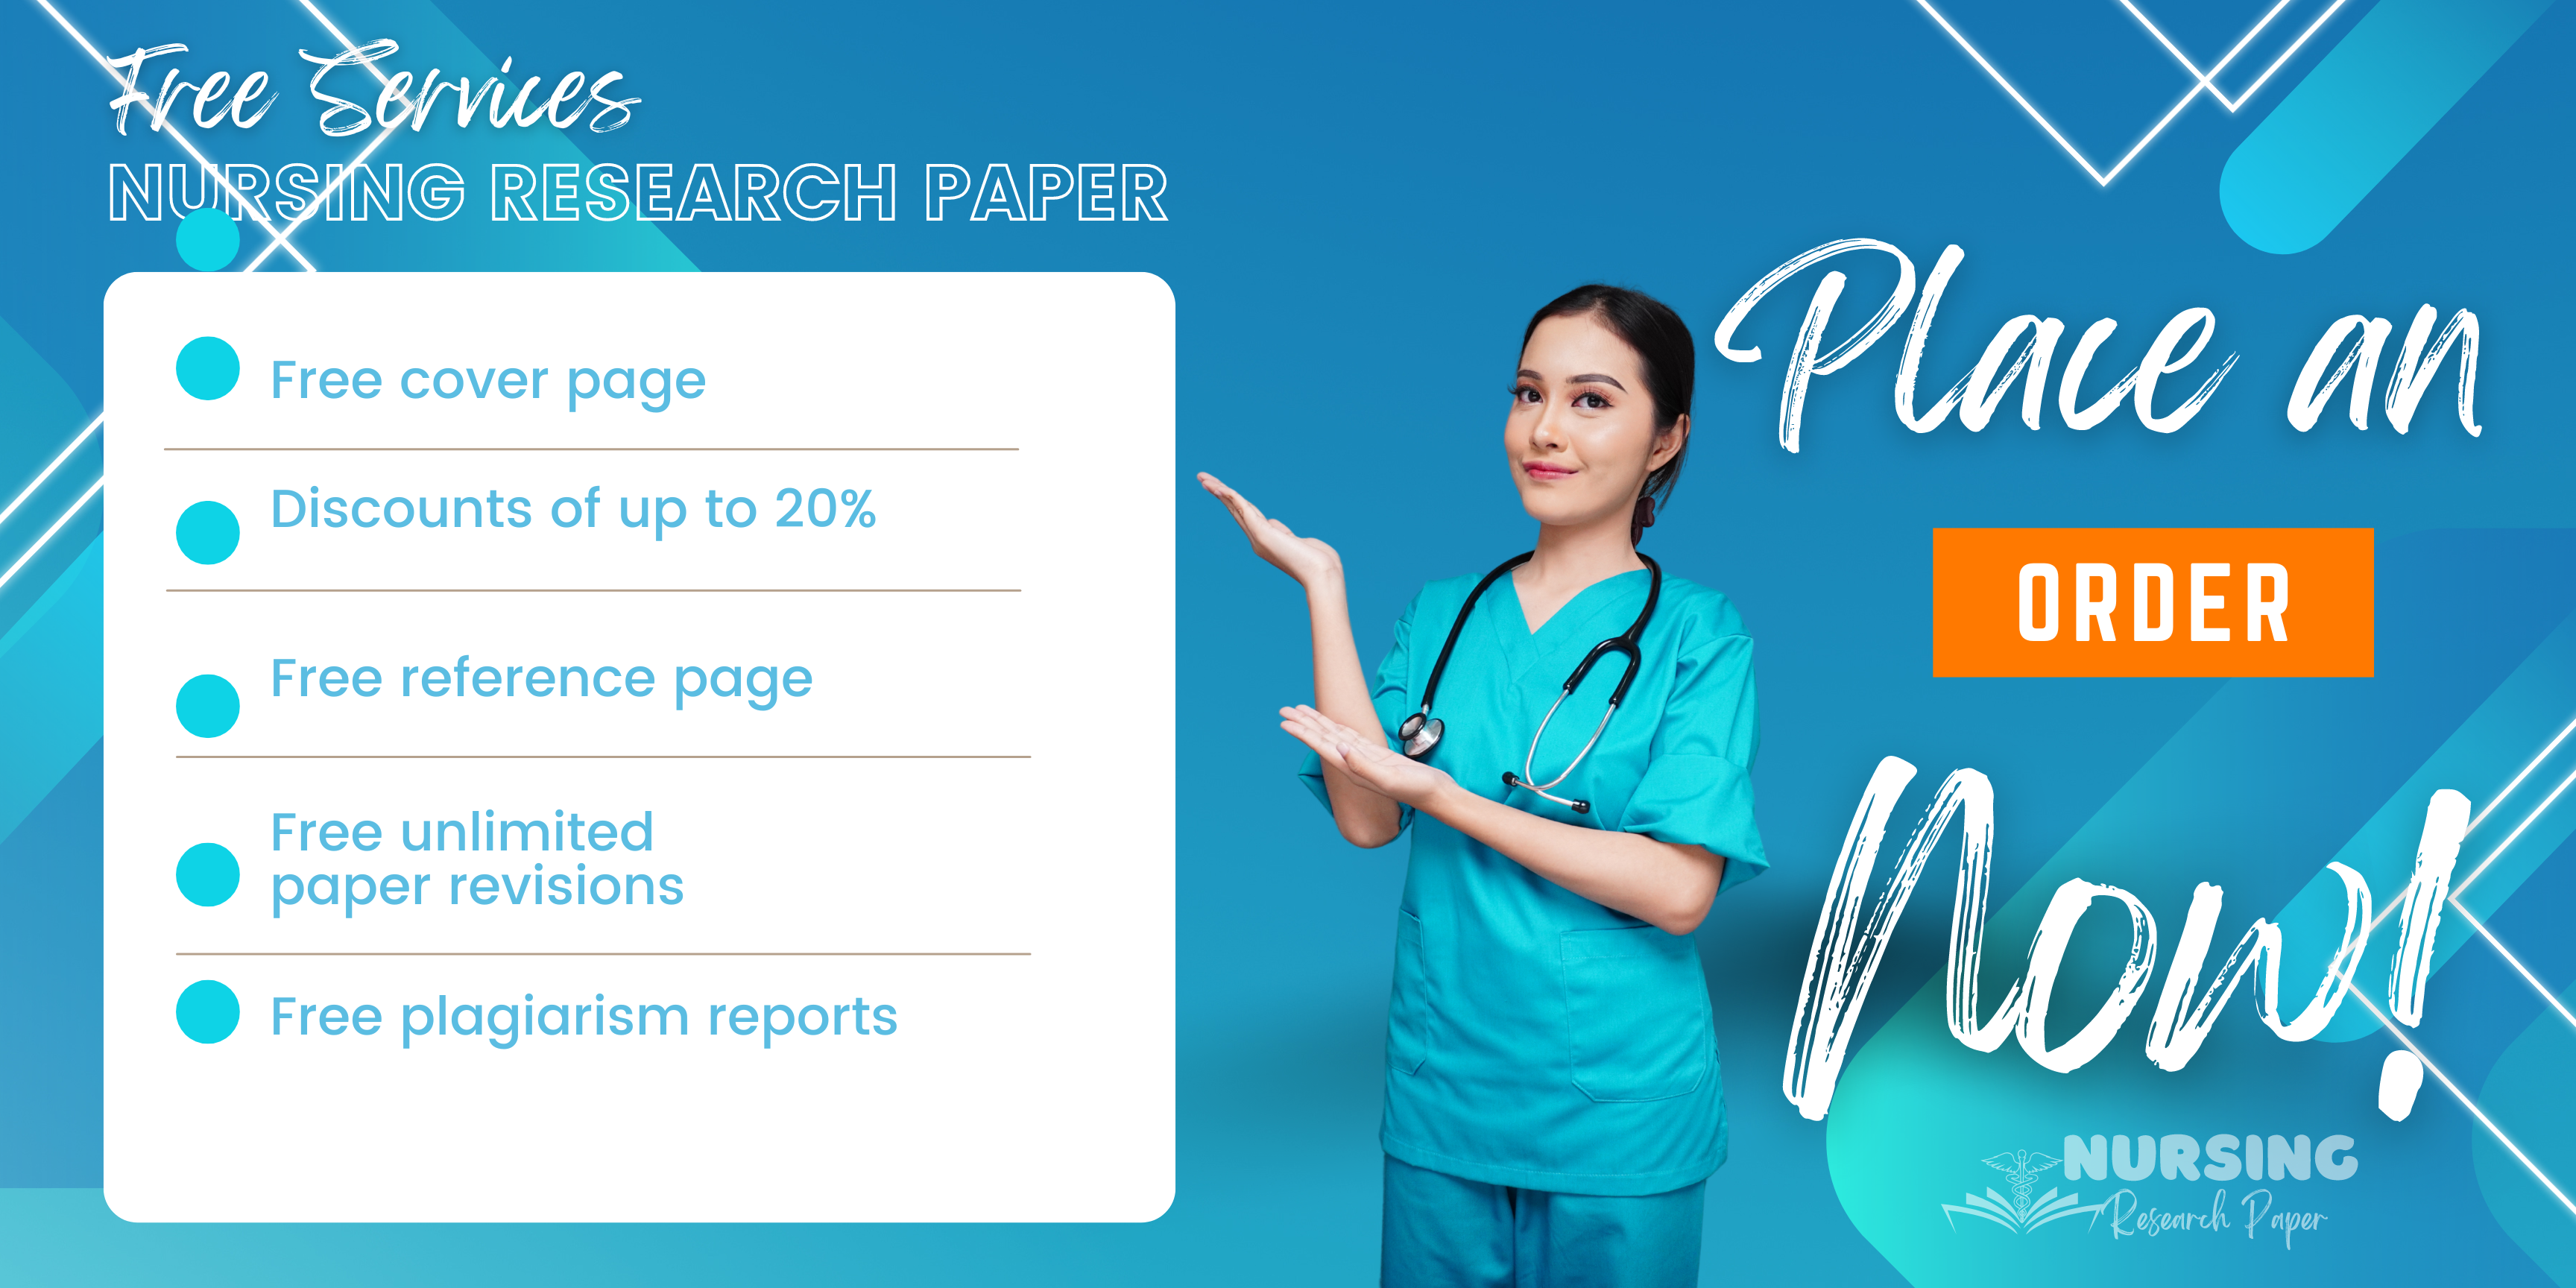 nursing research paper Free Service